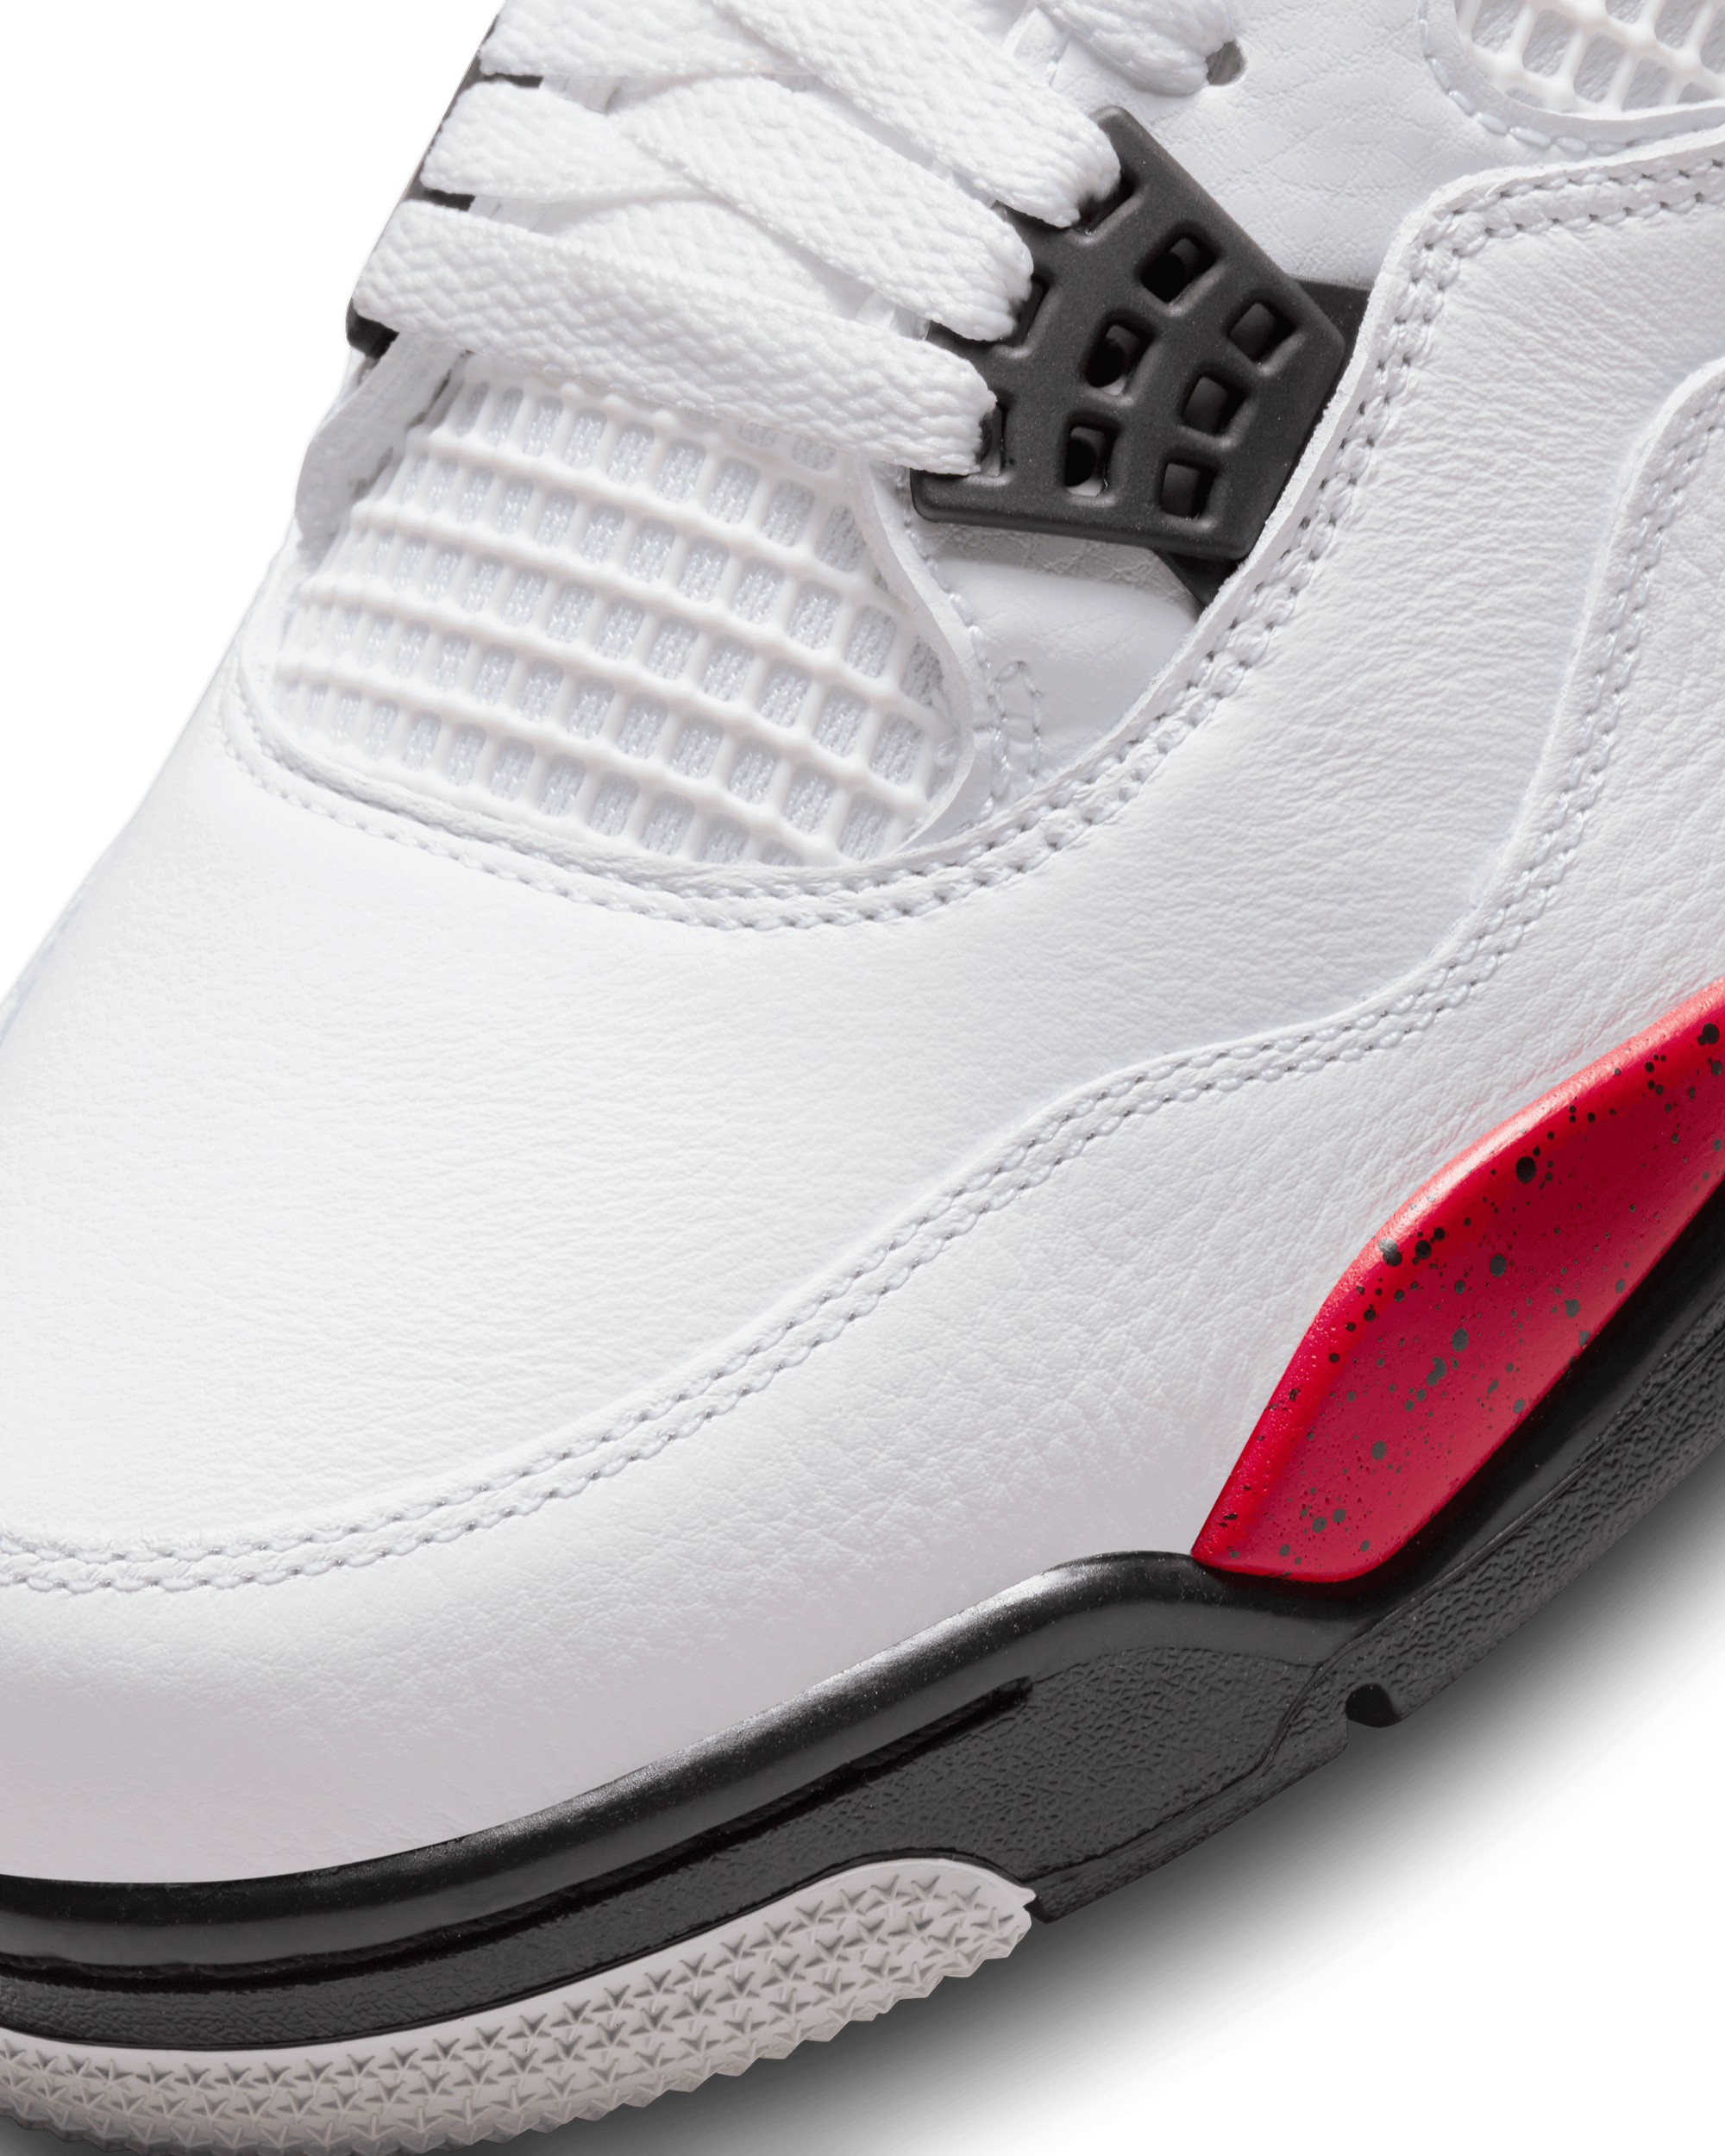 Air Jordan 4 Retro "Red Cement" - White / Fire Red / Black